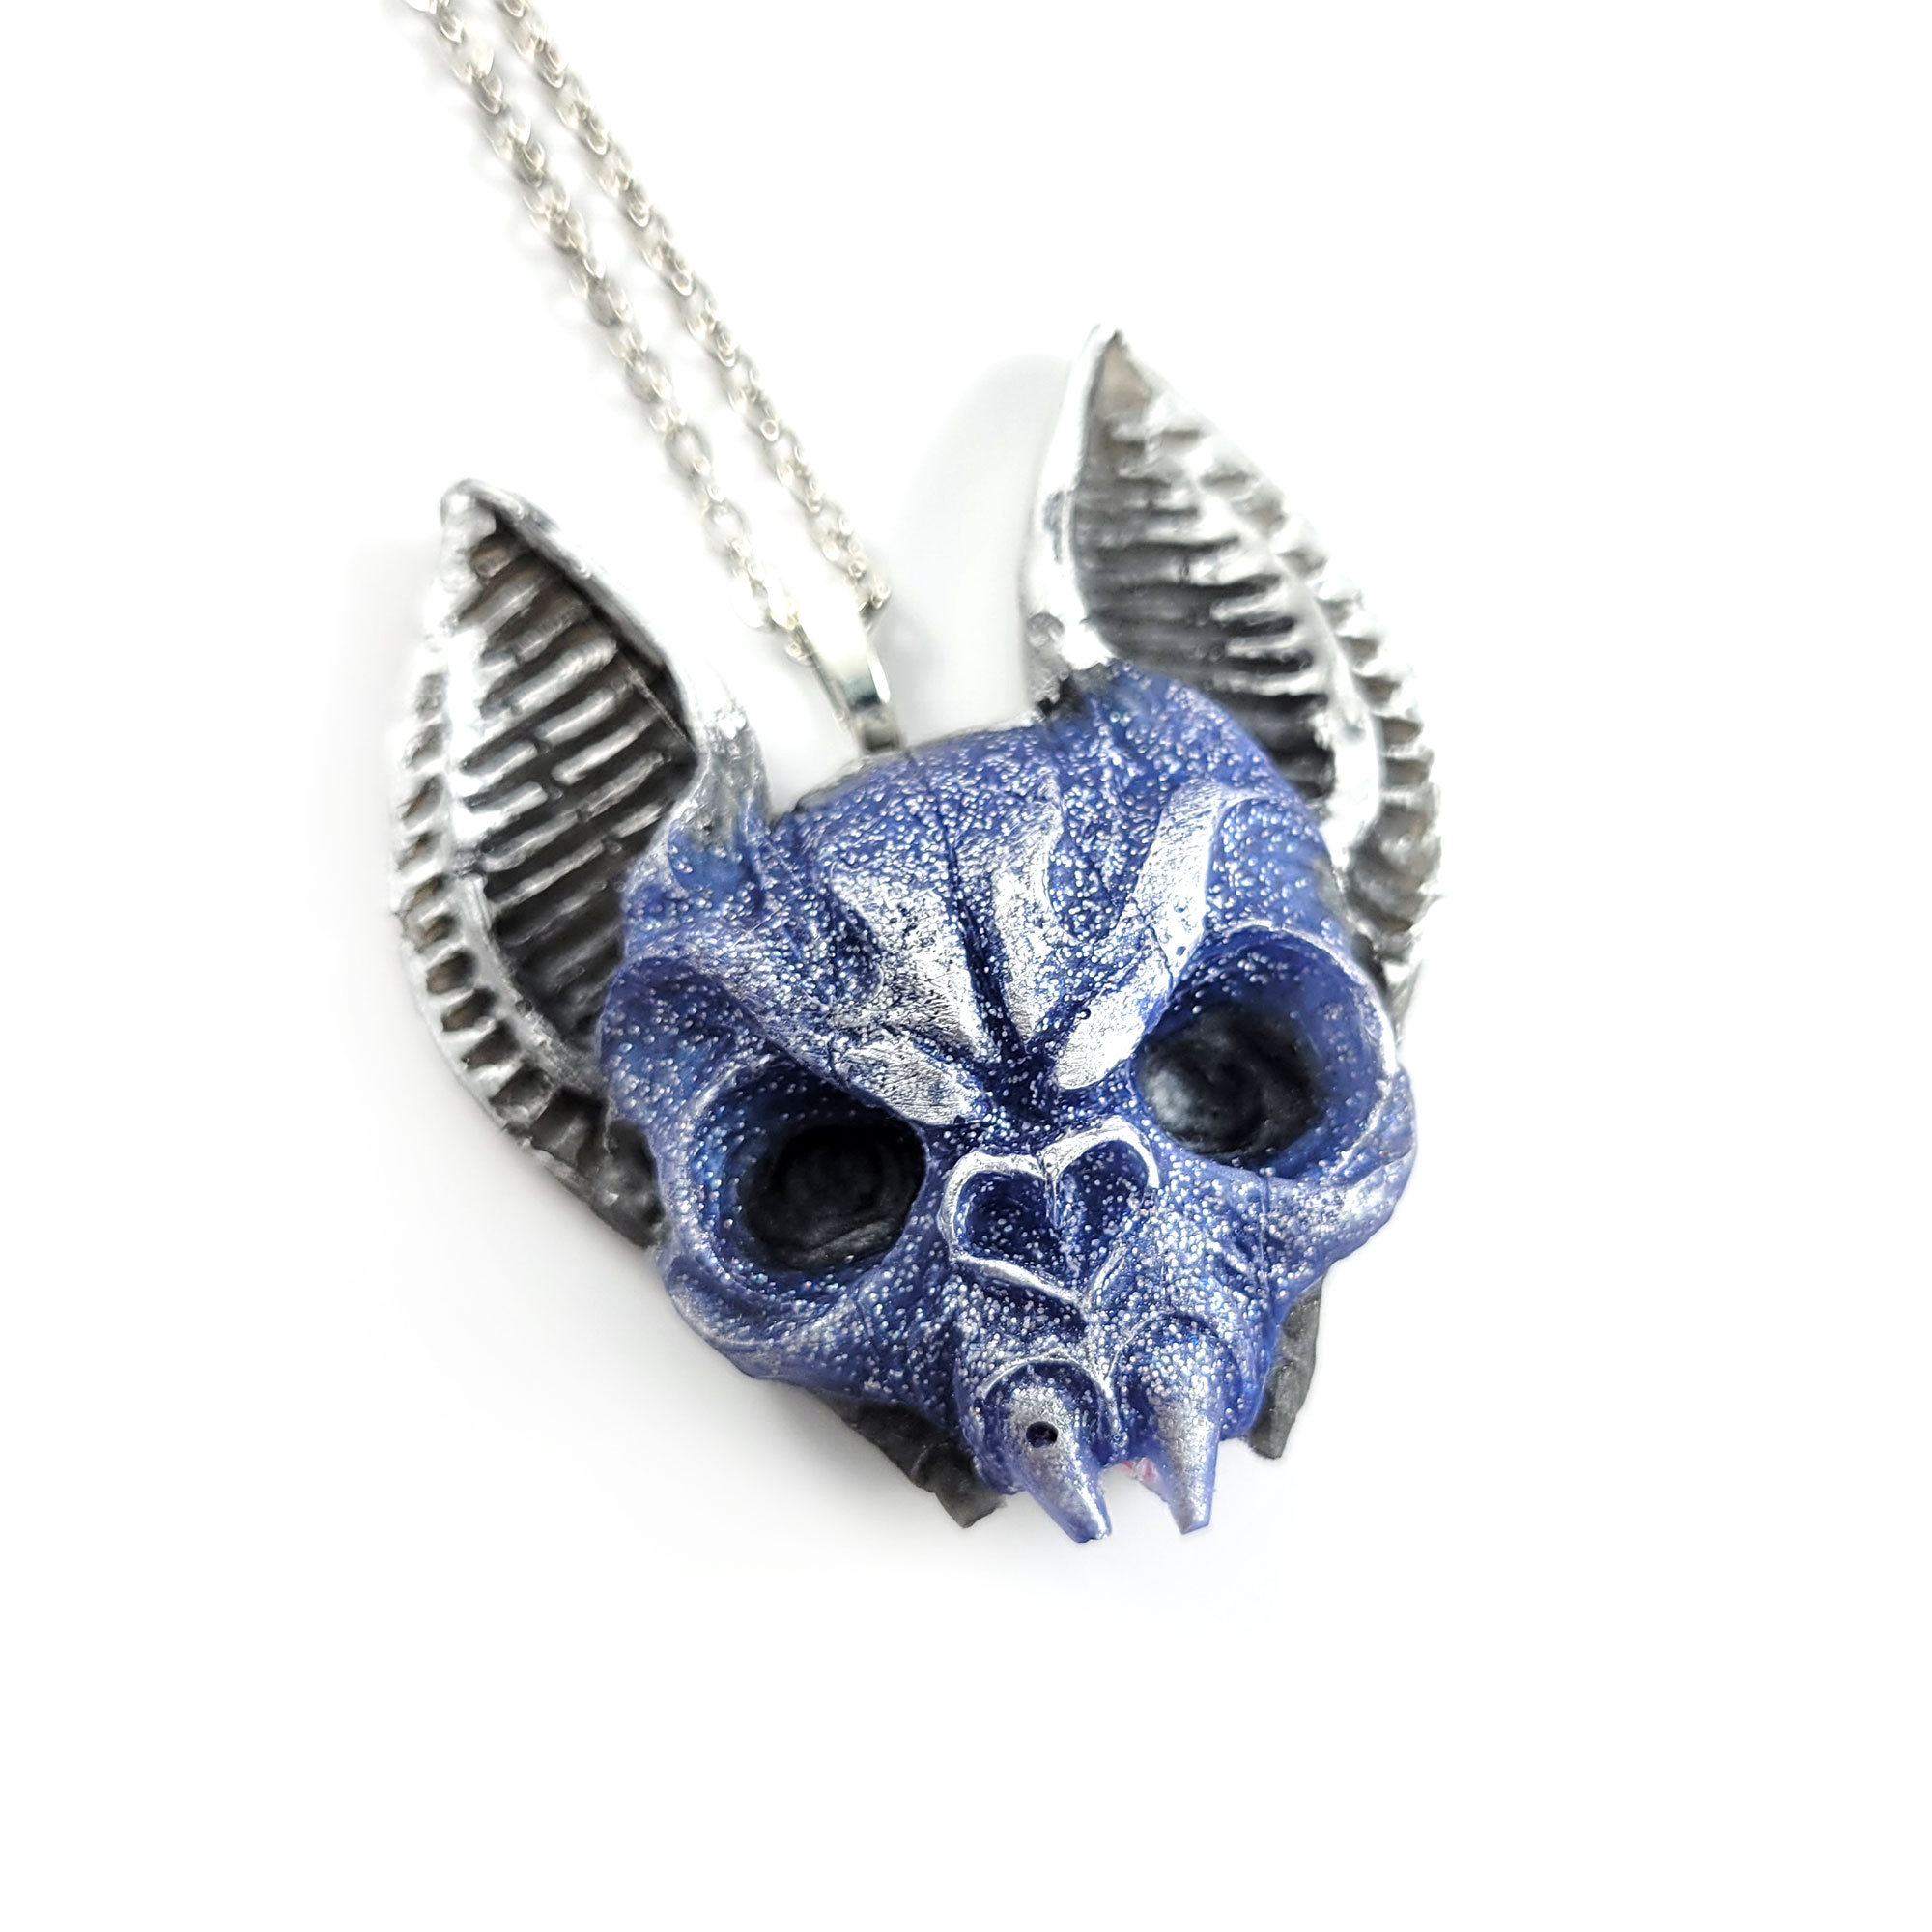 Blue & Silver Flying Death Bat Skull Necklace by Wilde Designs